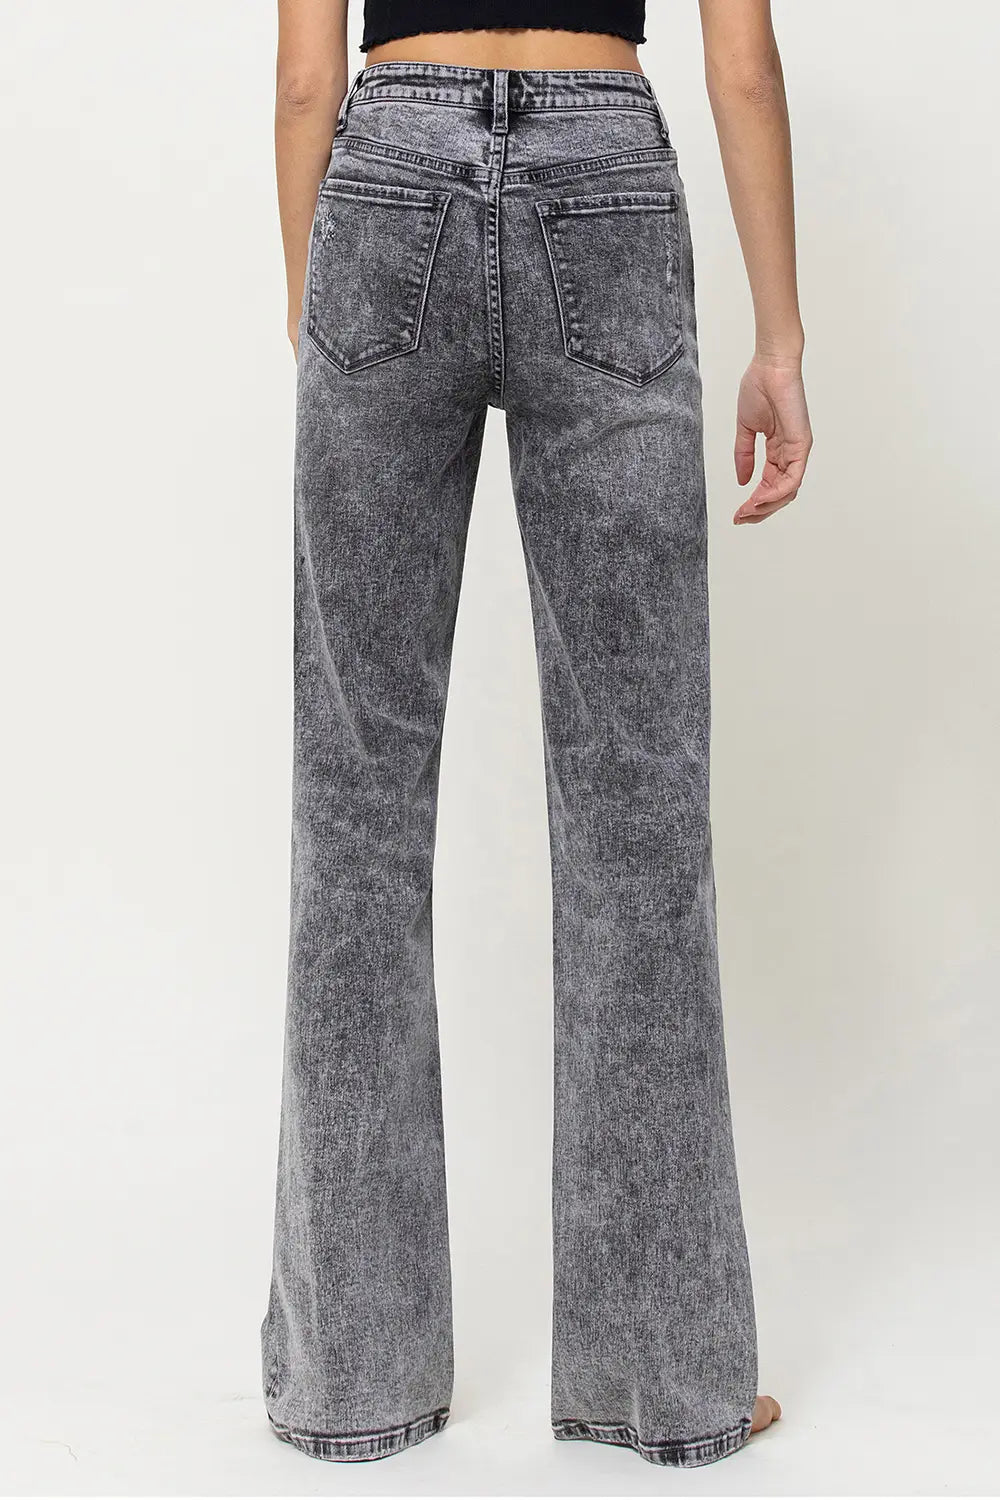 Leslie Gray 90’s Vintage Jeans